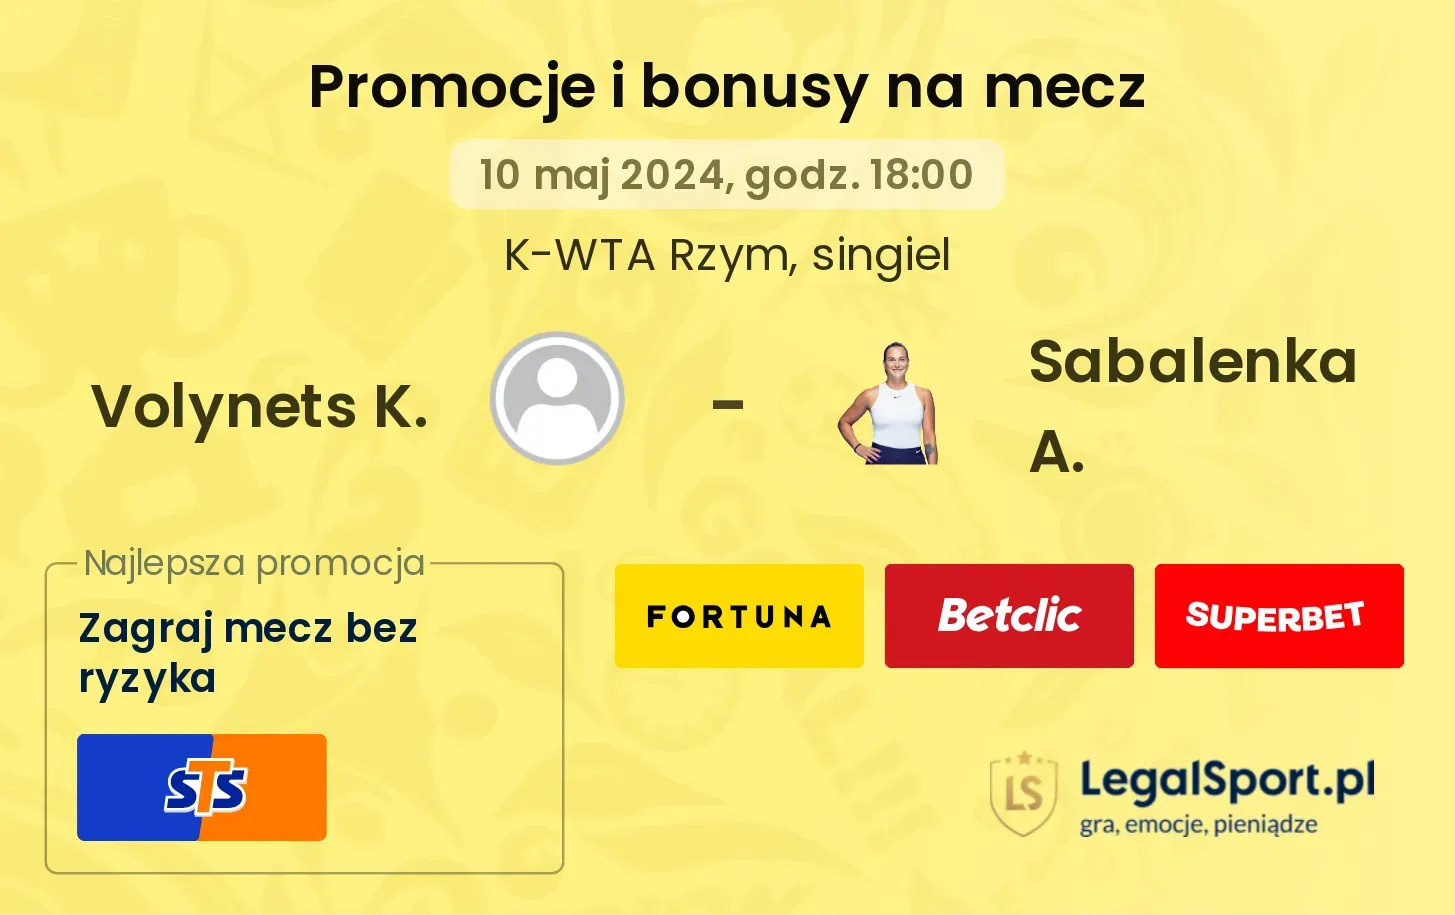 Volynets K. - Sabalenka A. promocje bonusy na mecz